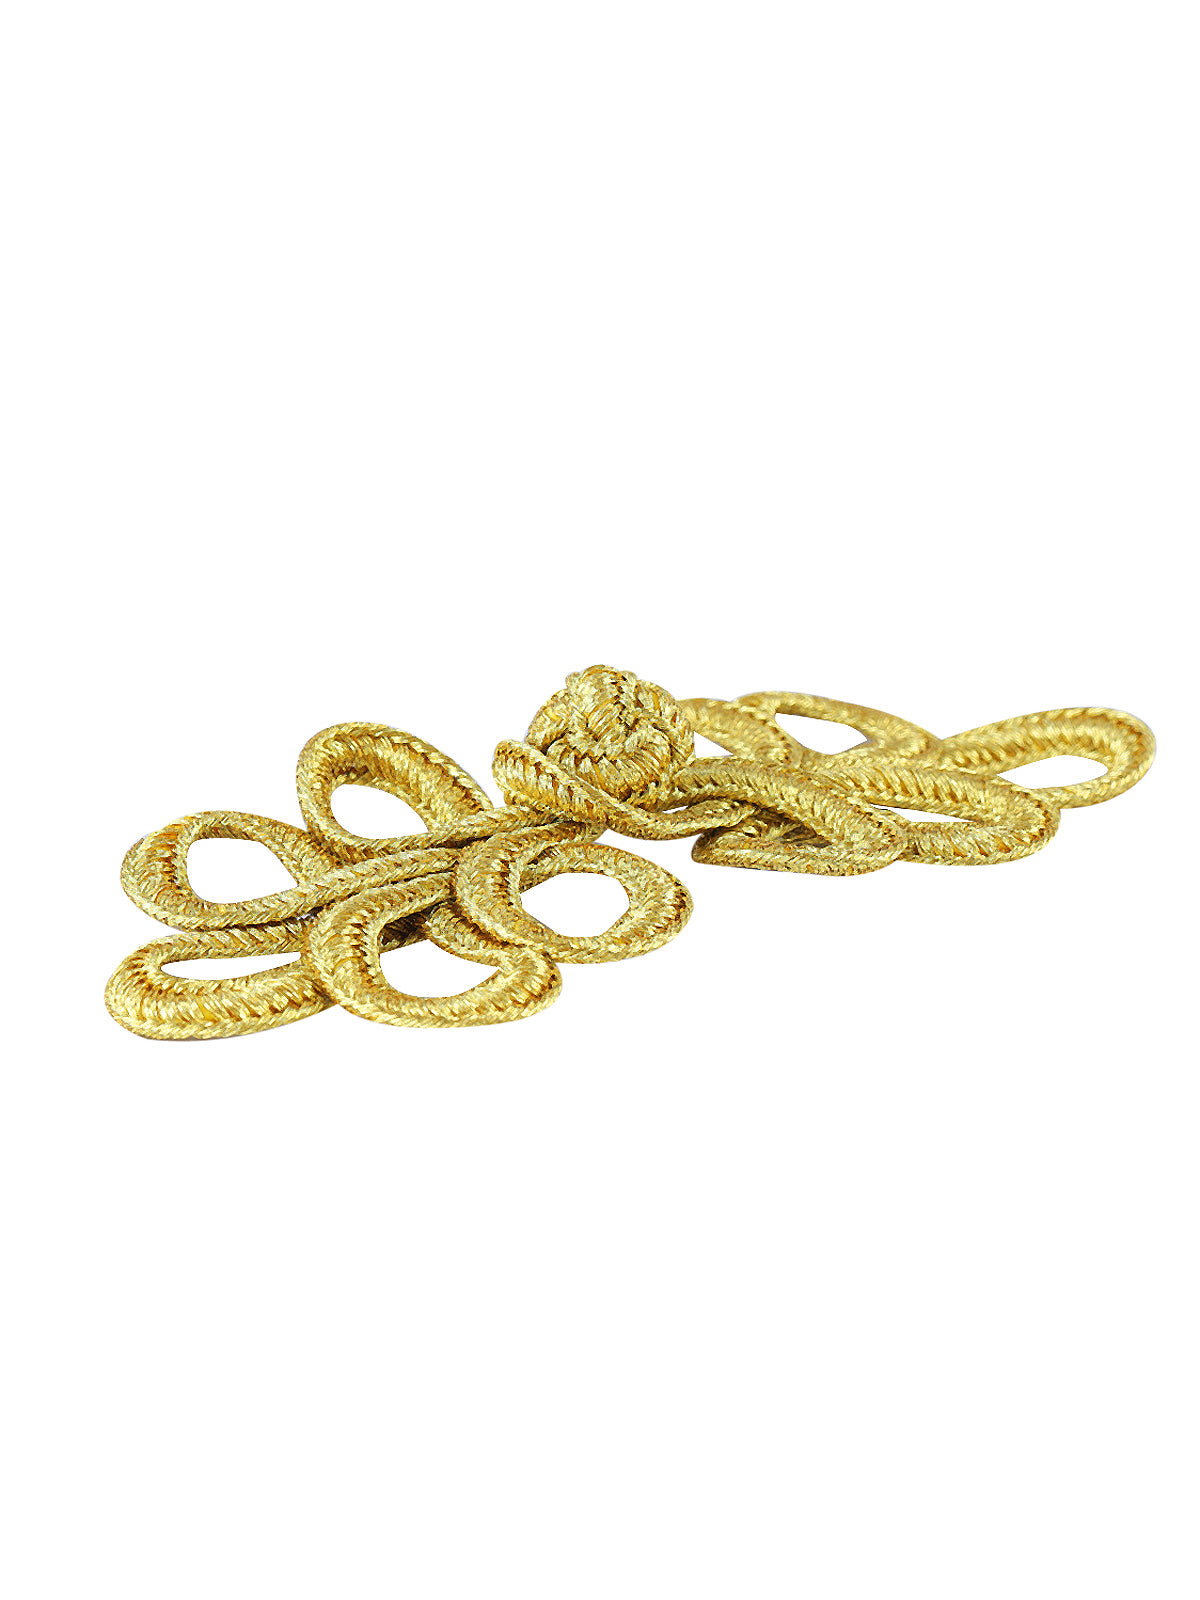 Shiny Metallic Bright Gold Braided Frog Knot Closure